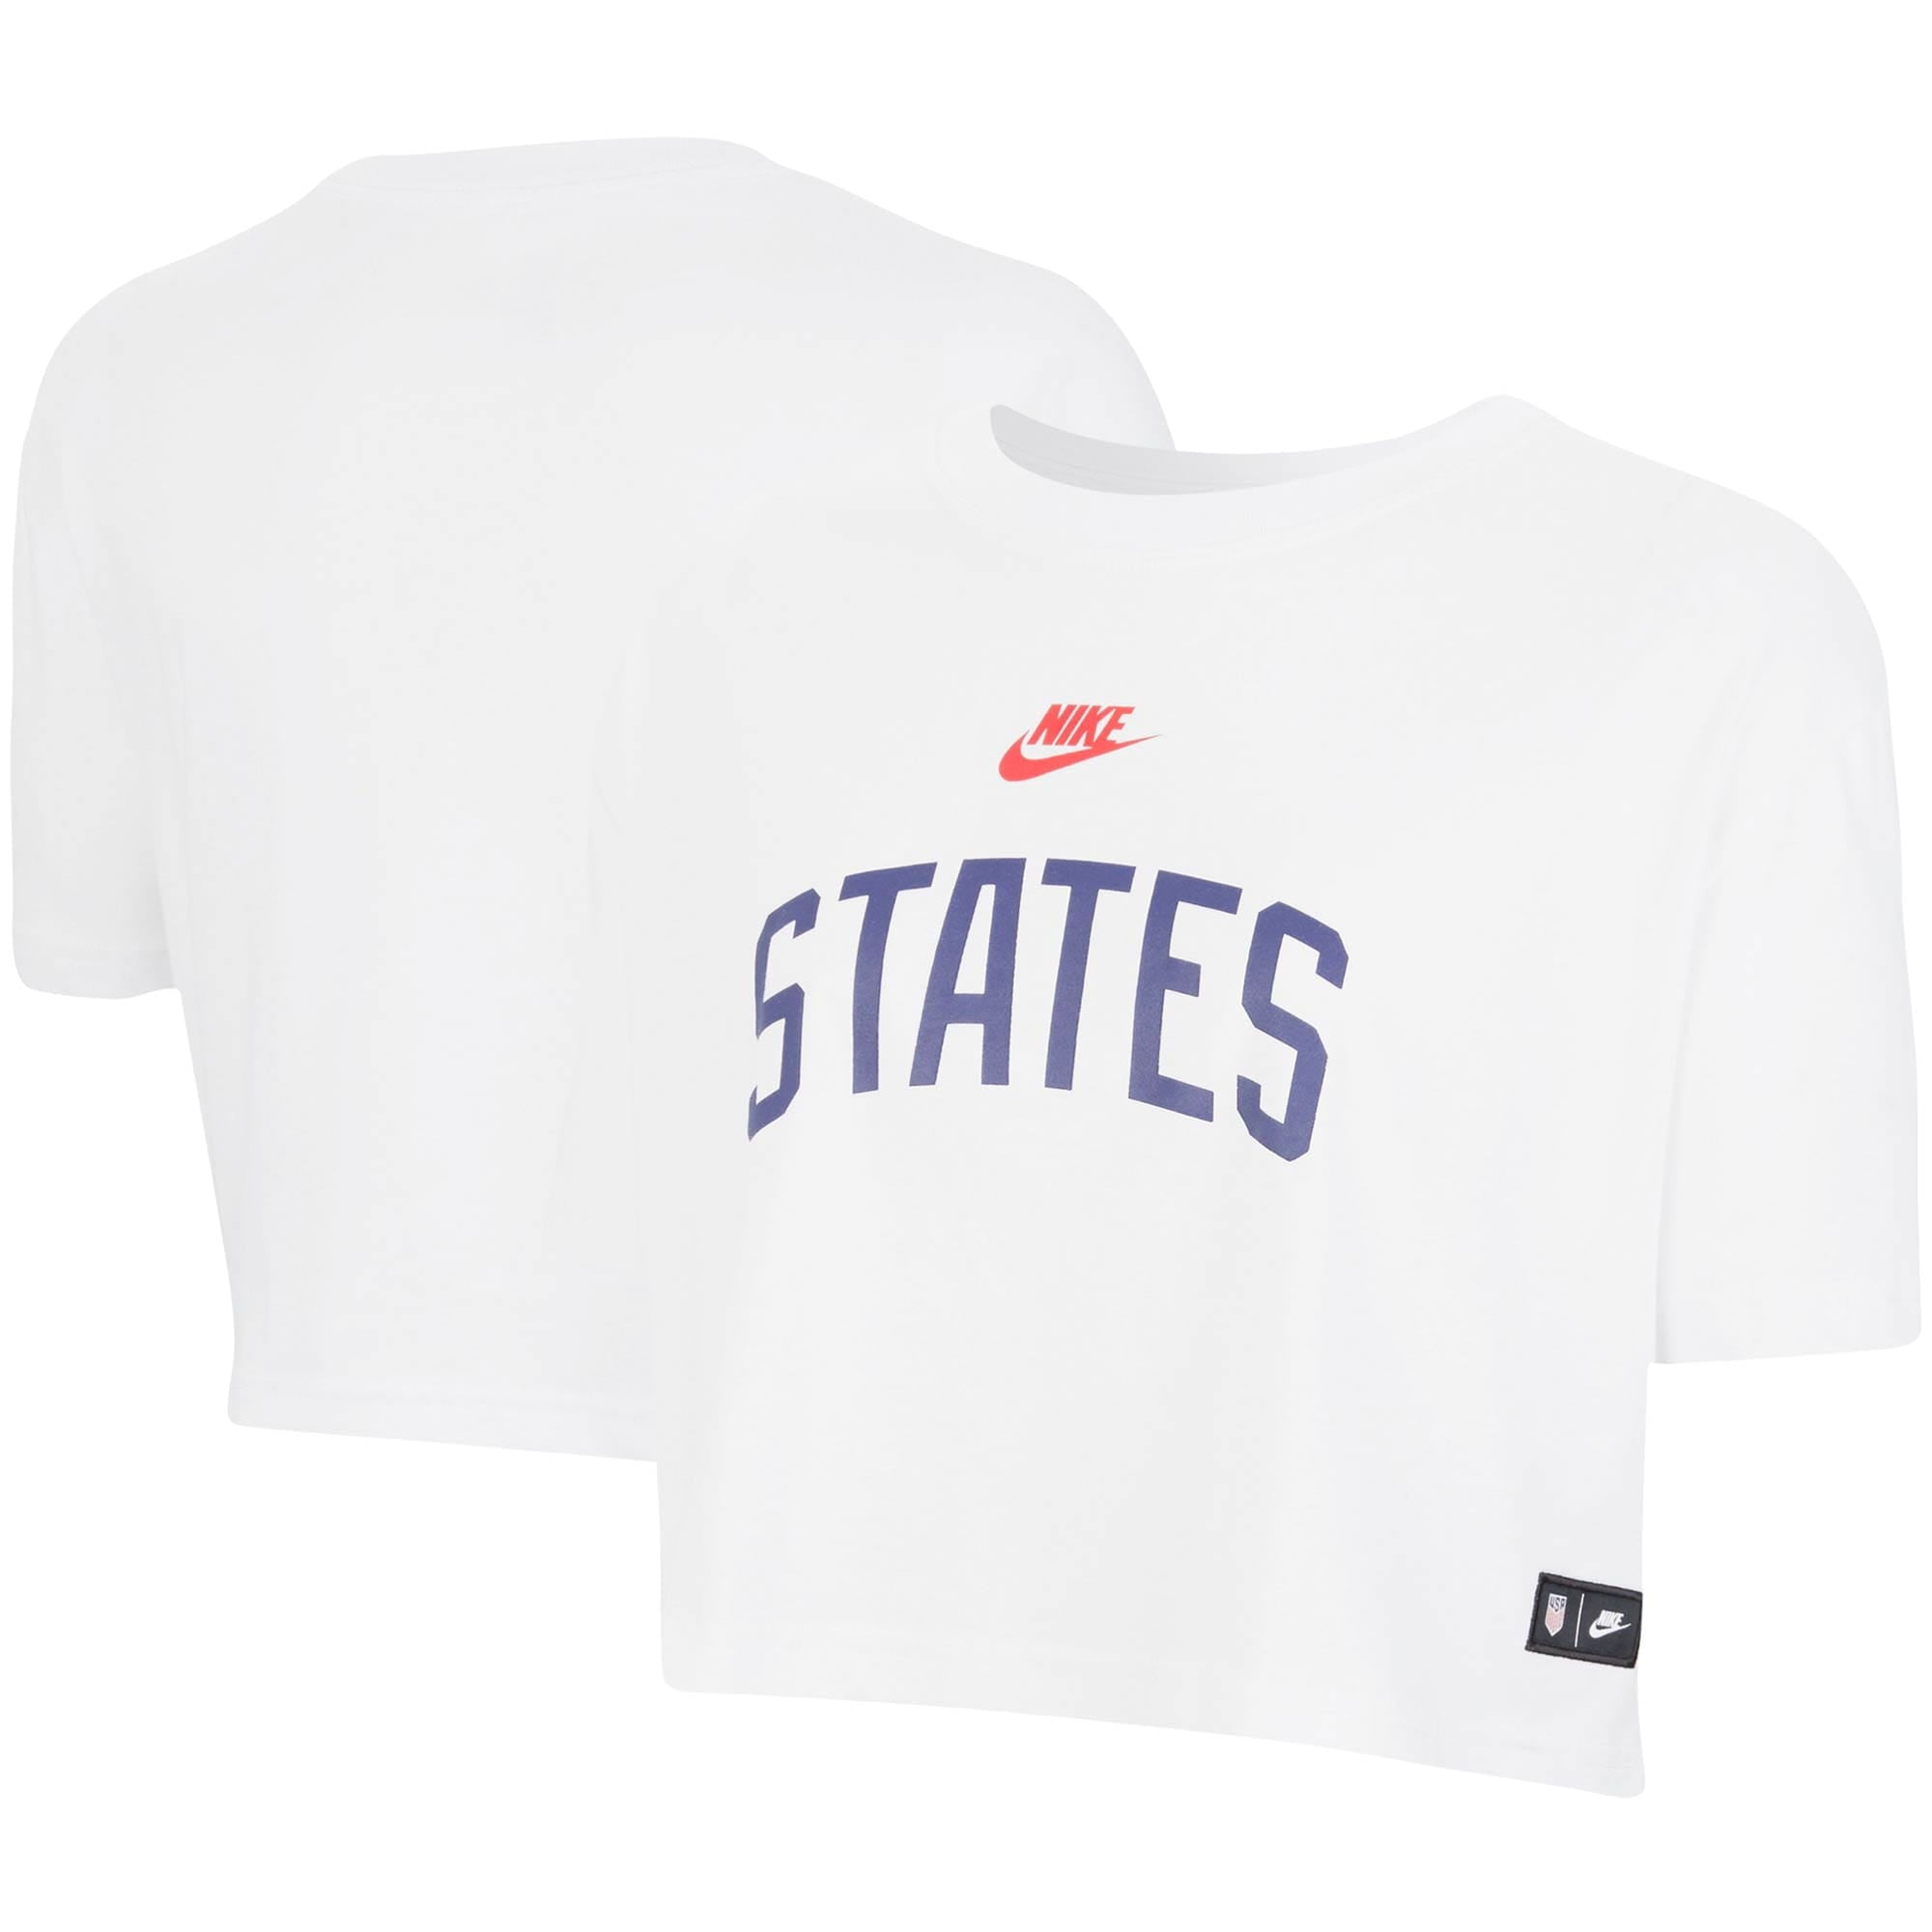 Human heroisk Løse US Soccer Nike Women's States Crop Top T-Shirt - White - Walmart.com